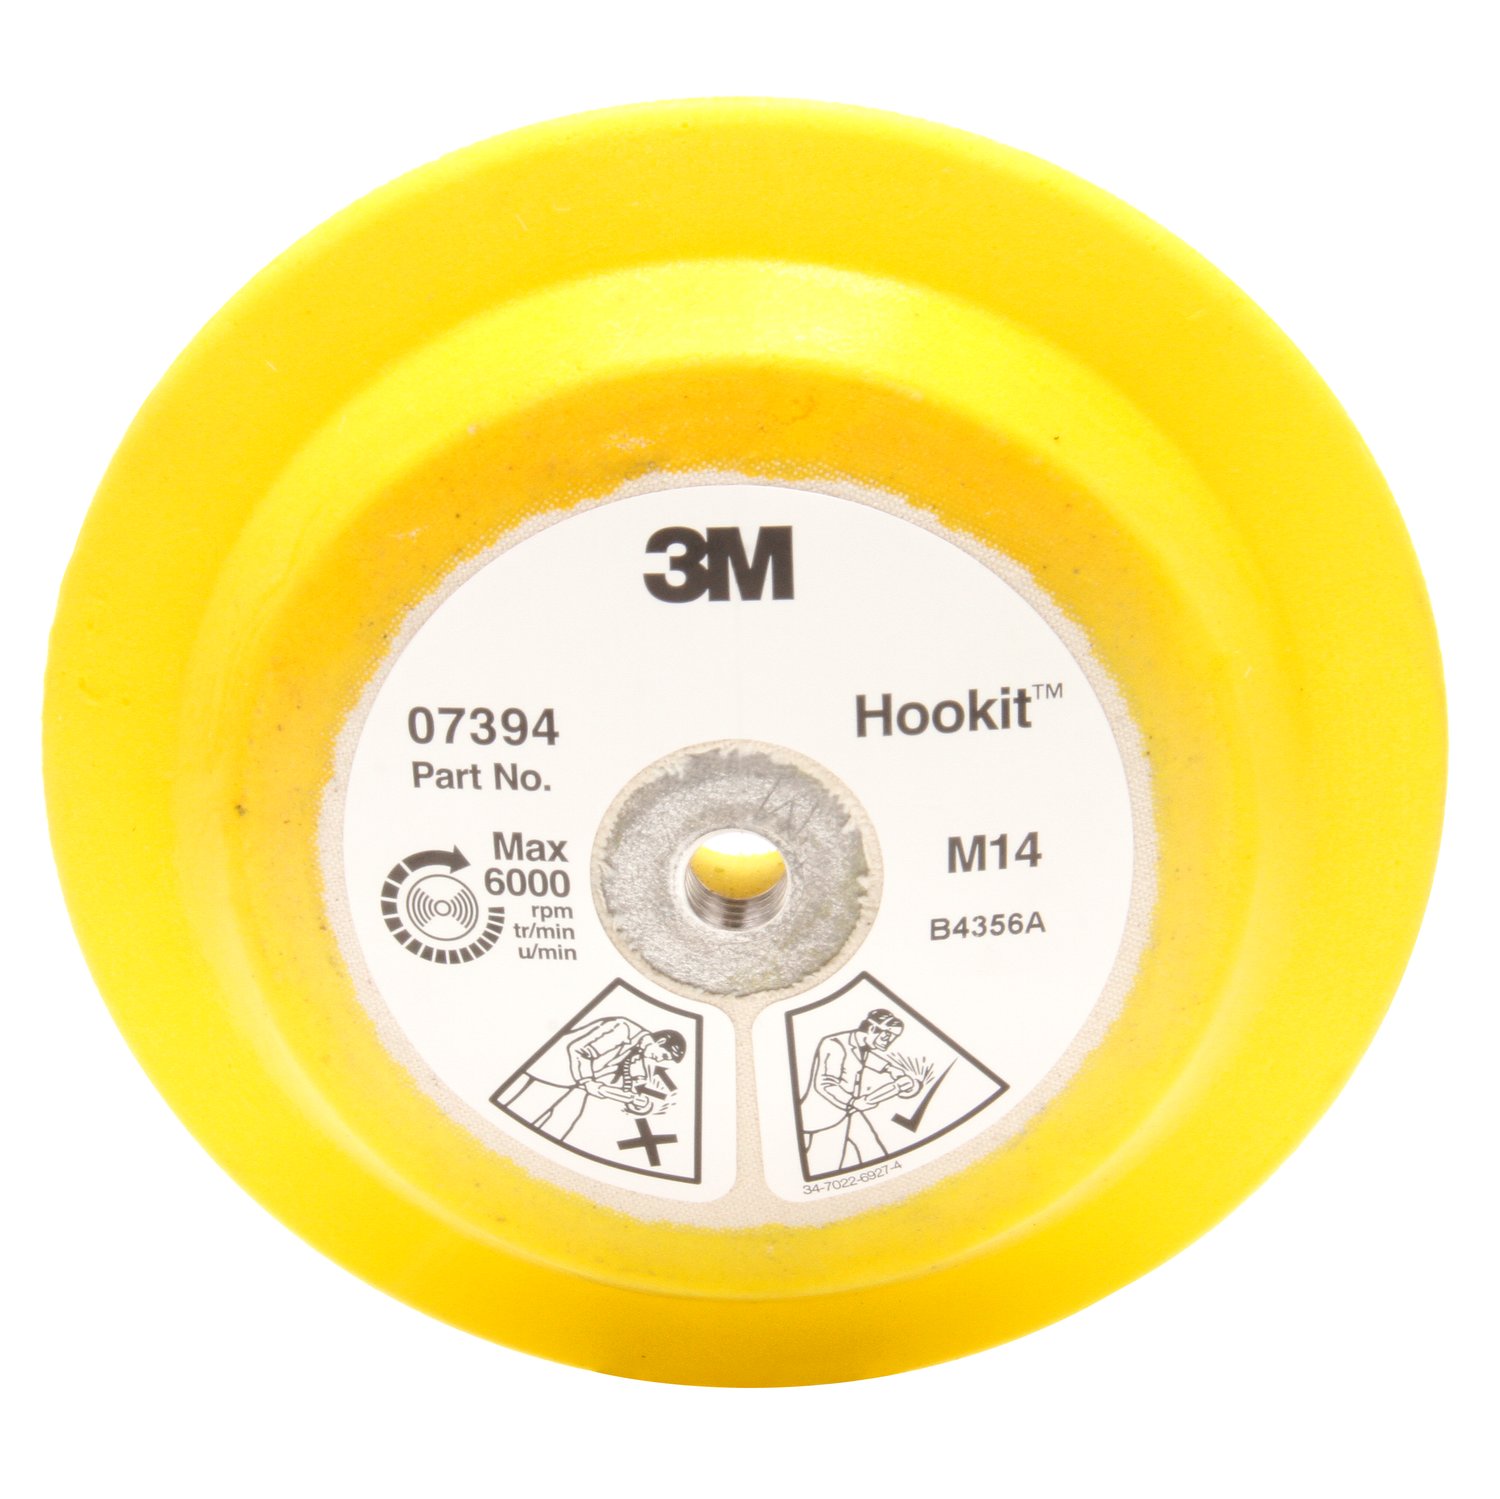 7000045702 - 3M Hookit Disc Pad 07394, 178 mm x 25 mm M14-2.0 Internal, 1 ea/Case